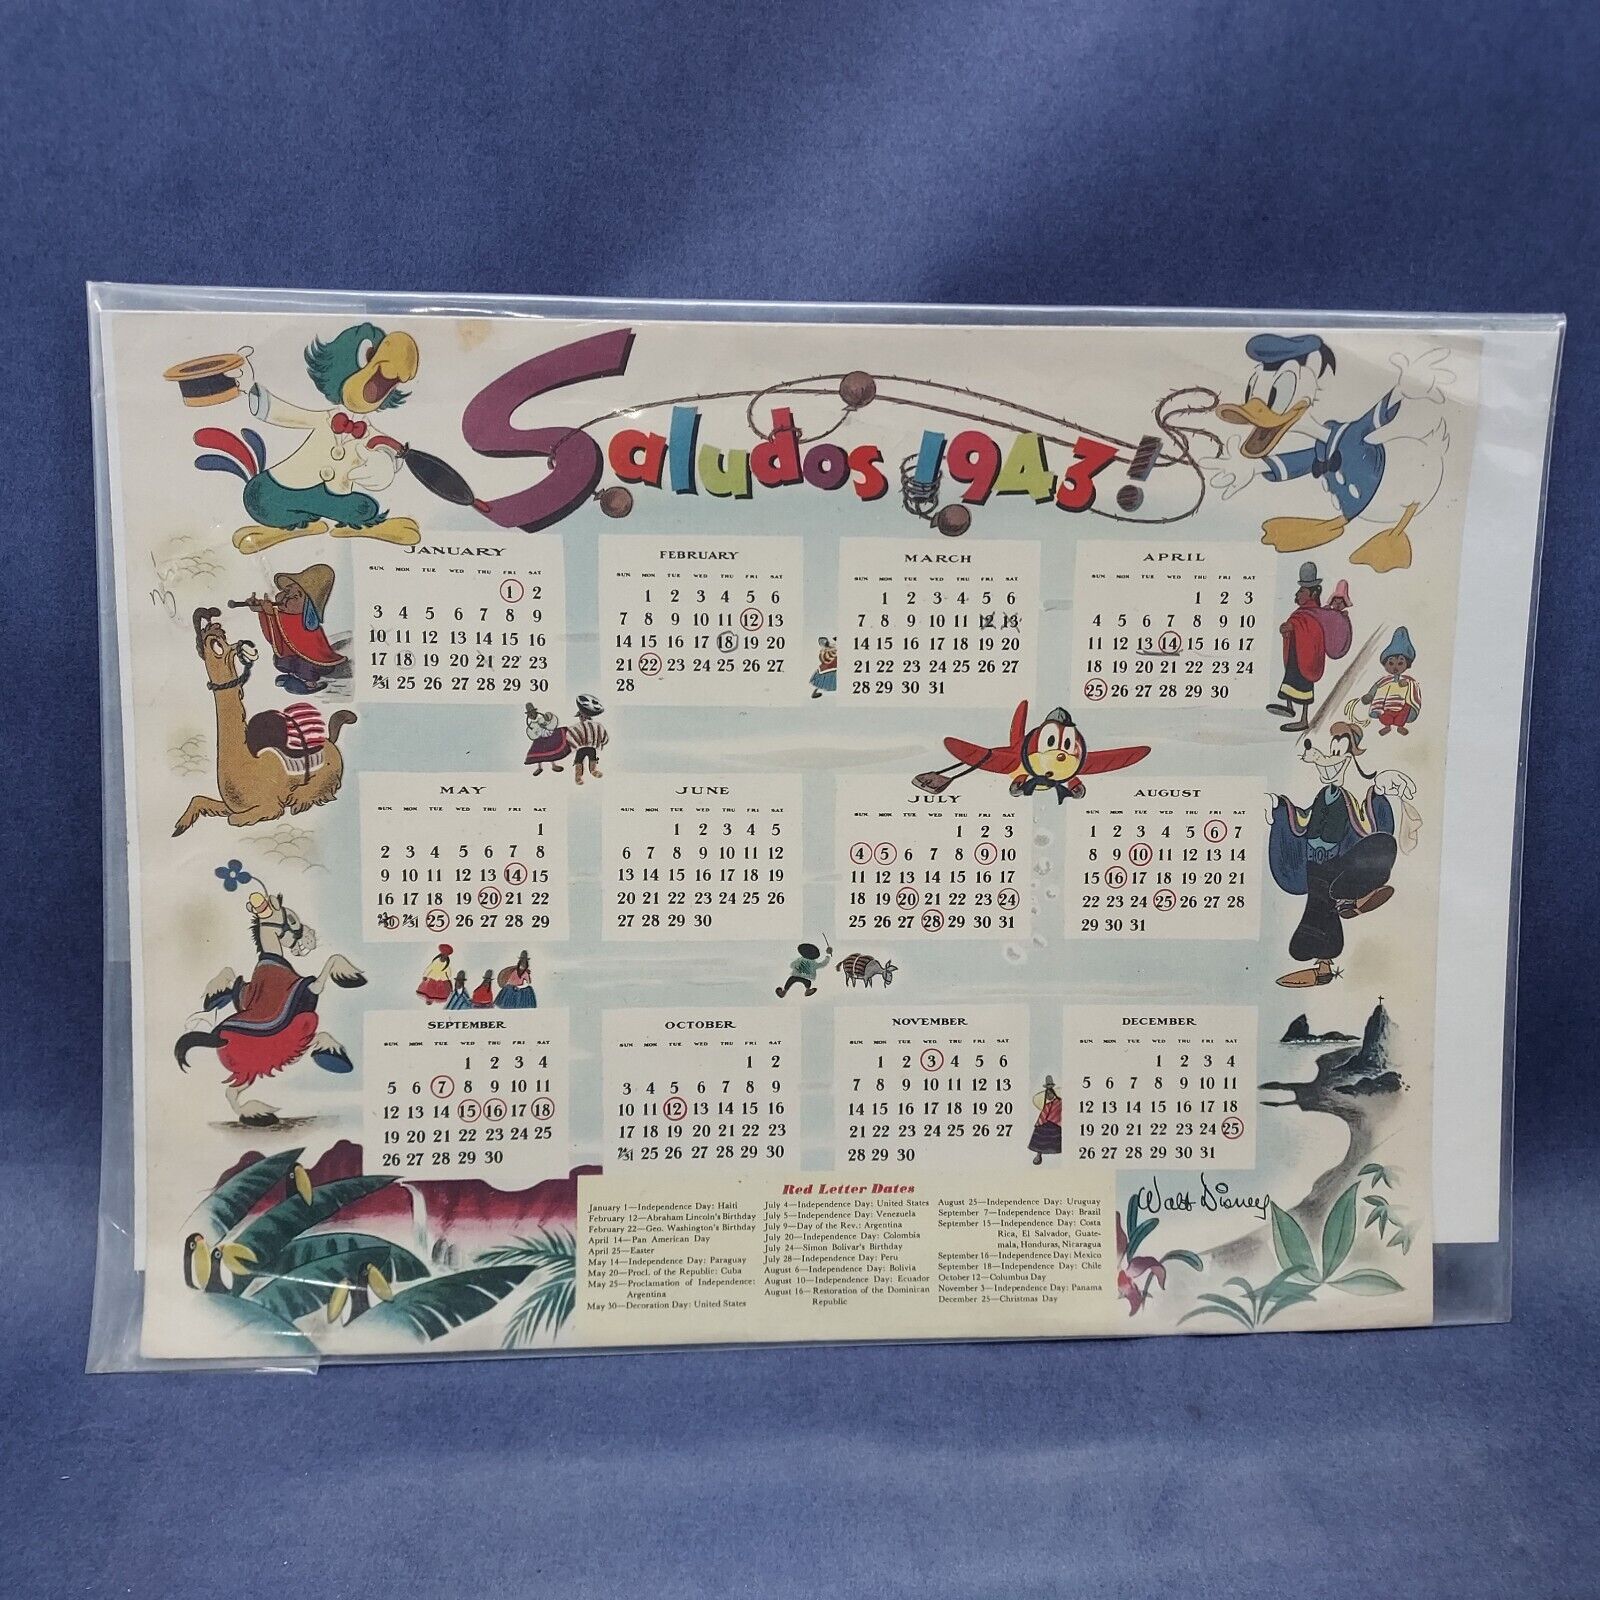 Vintage Disney Saludos 1943 Calendar With Donald Duck & Goofy 10 x 8